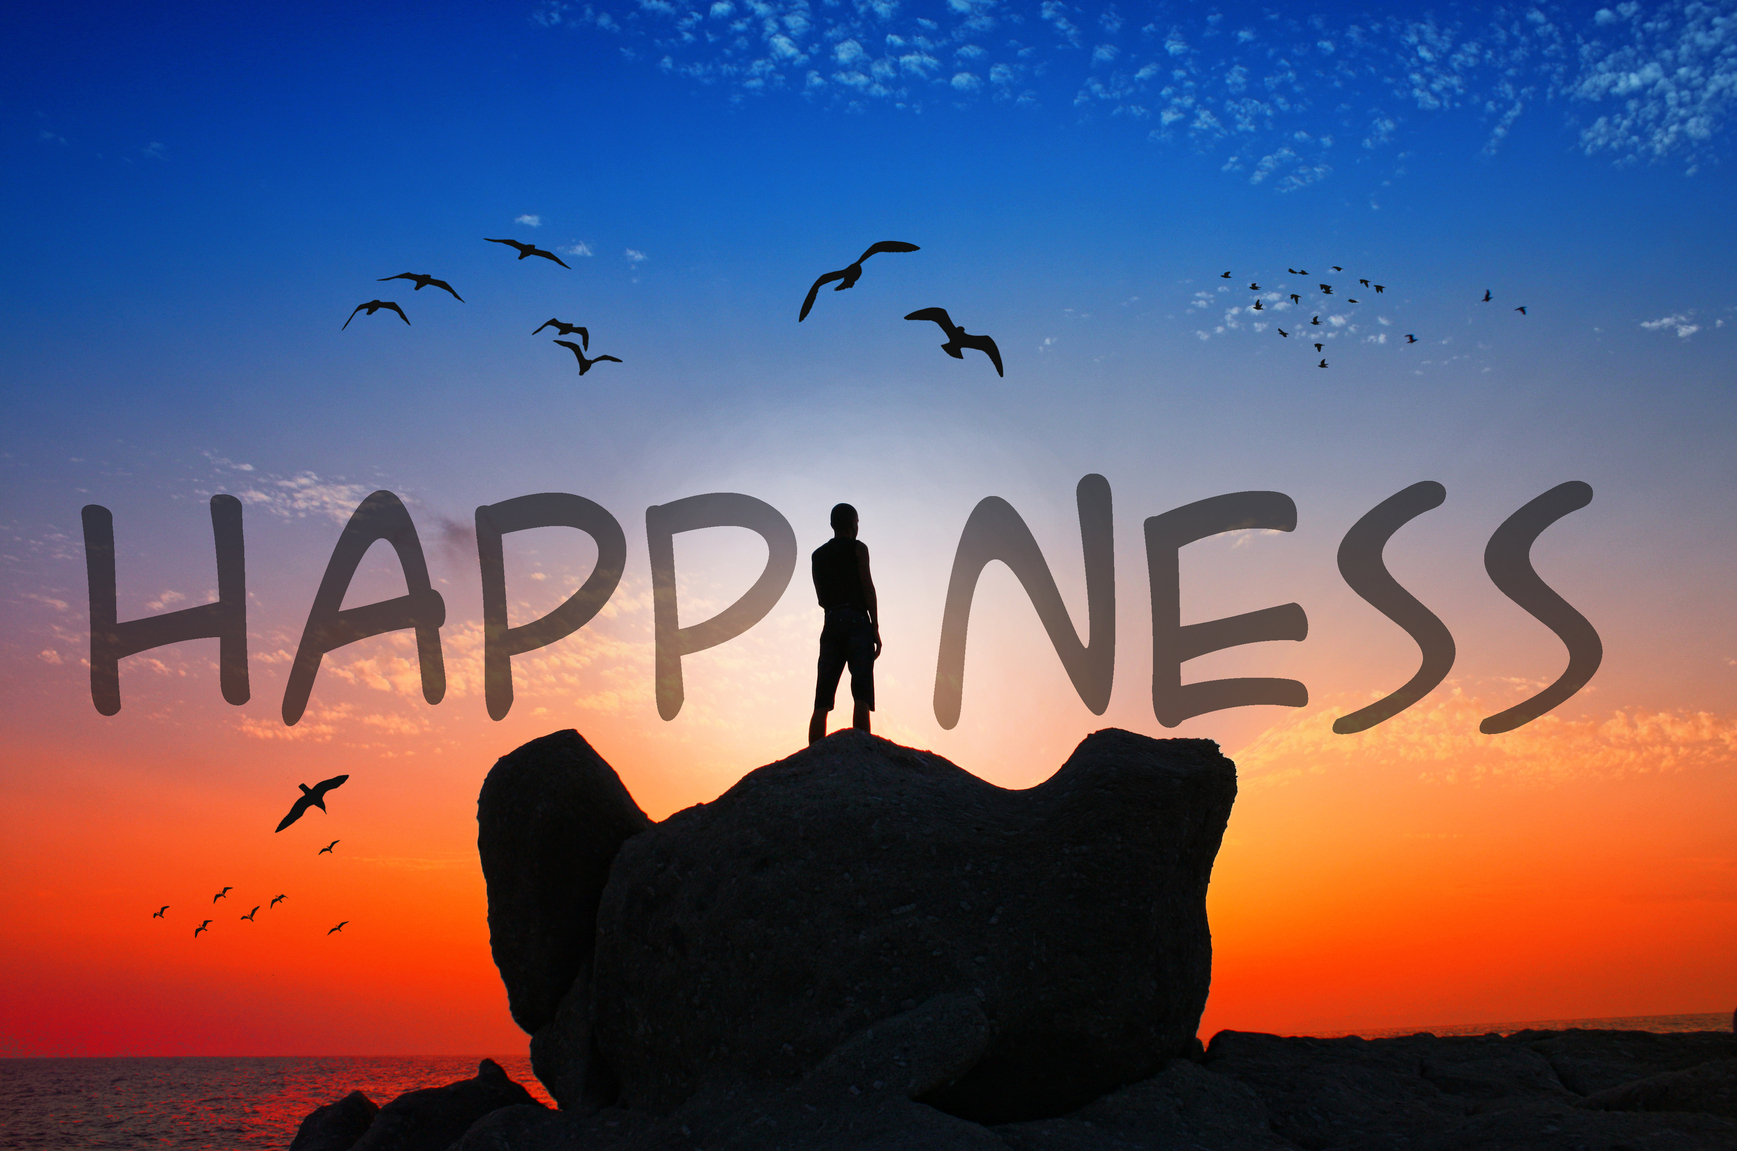 Everybody were happy. Happiness картинки. Счастье. Happiness картинка для презентации. Изображение счастья.